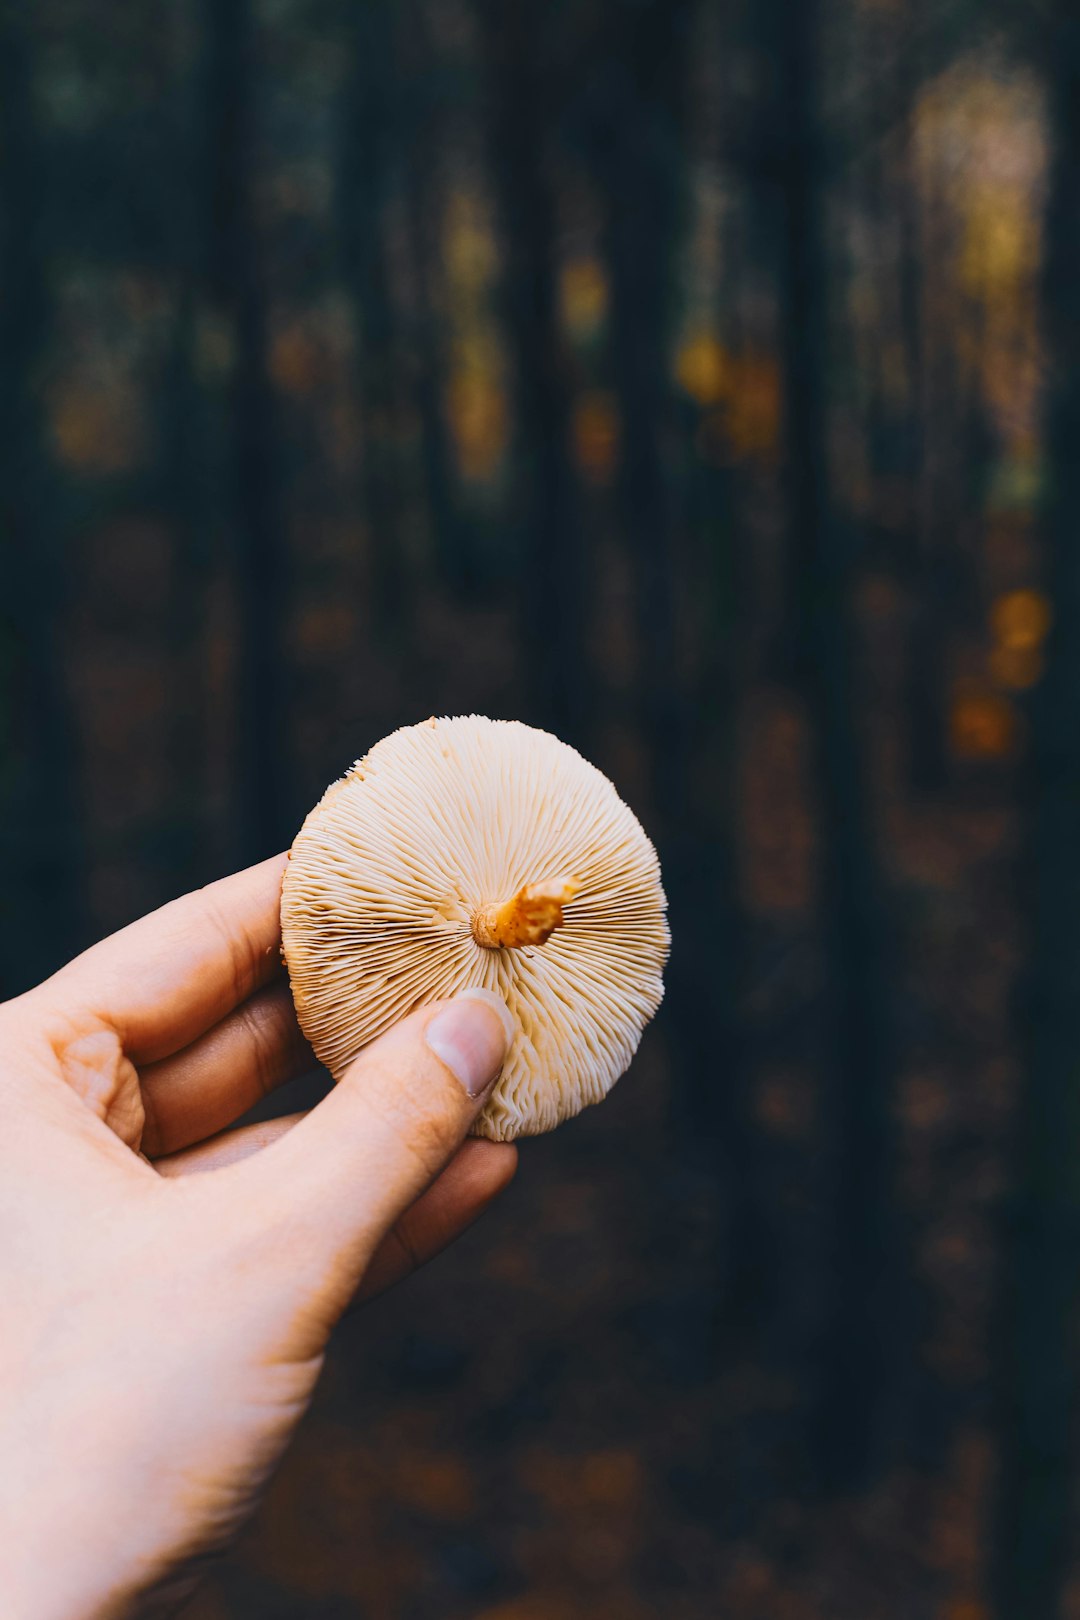 person holding brown mushroom